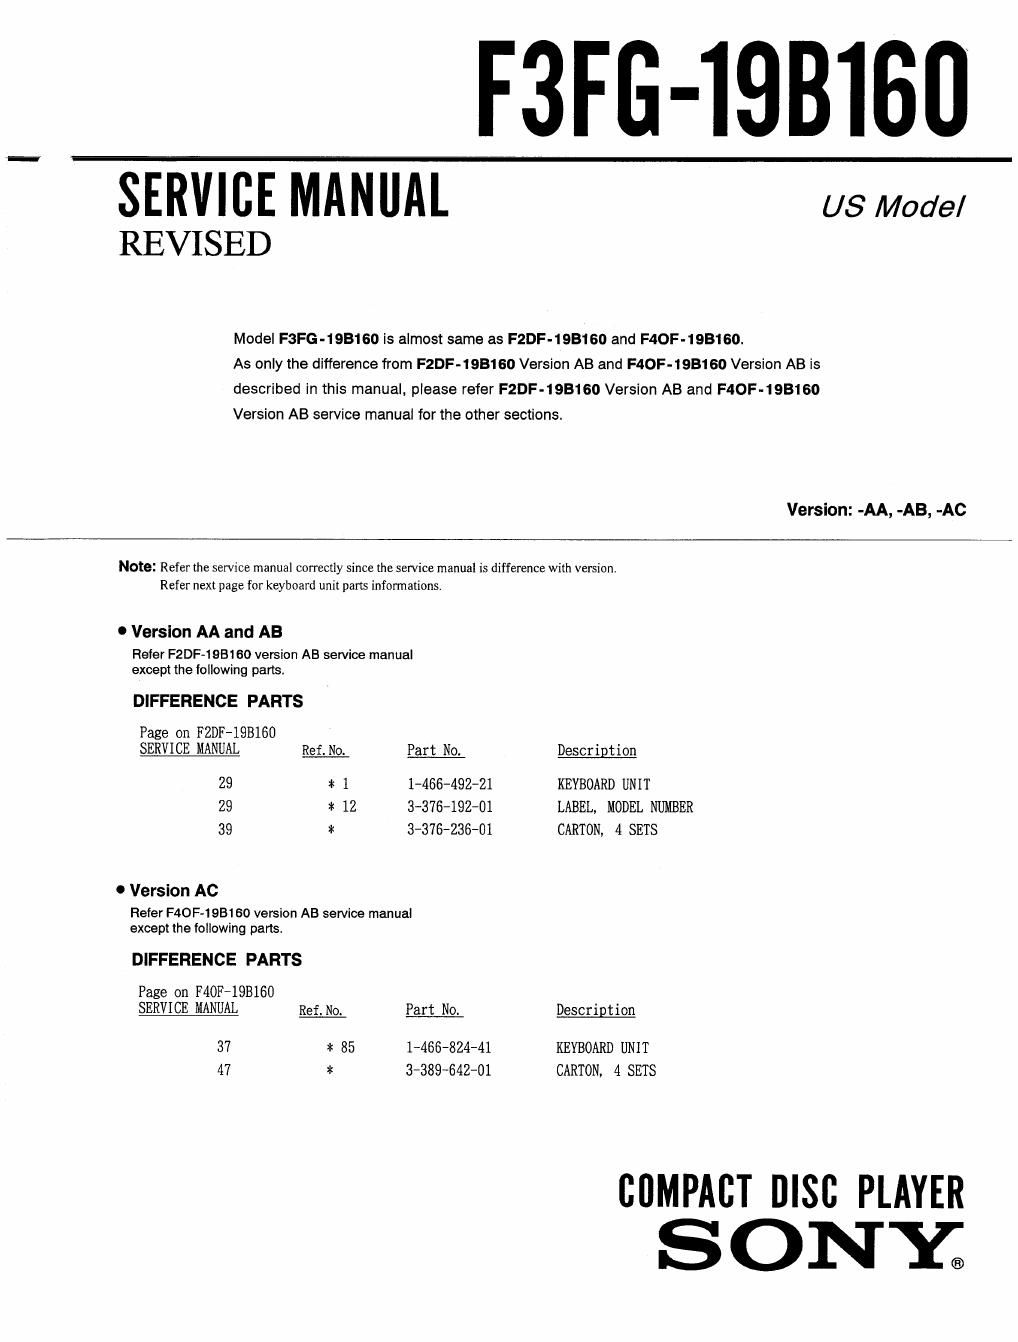 sony f 3 fg 19 b 160 service manual